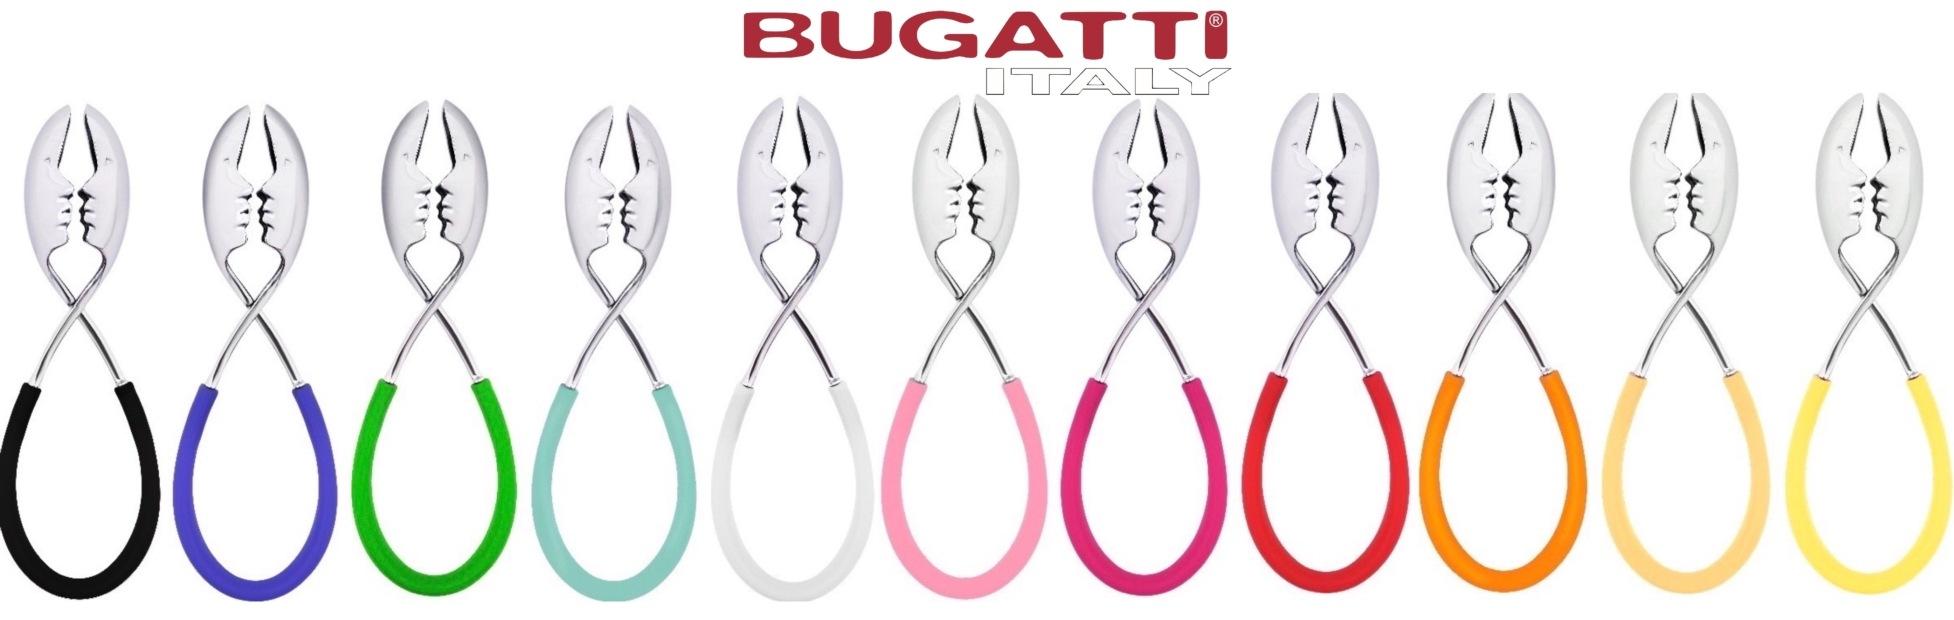 Bugatti Italy lifestyle products slide 4